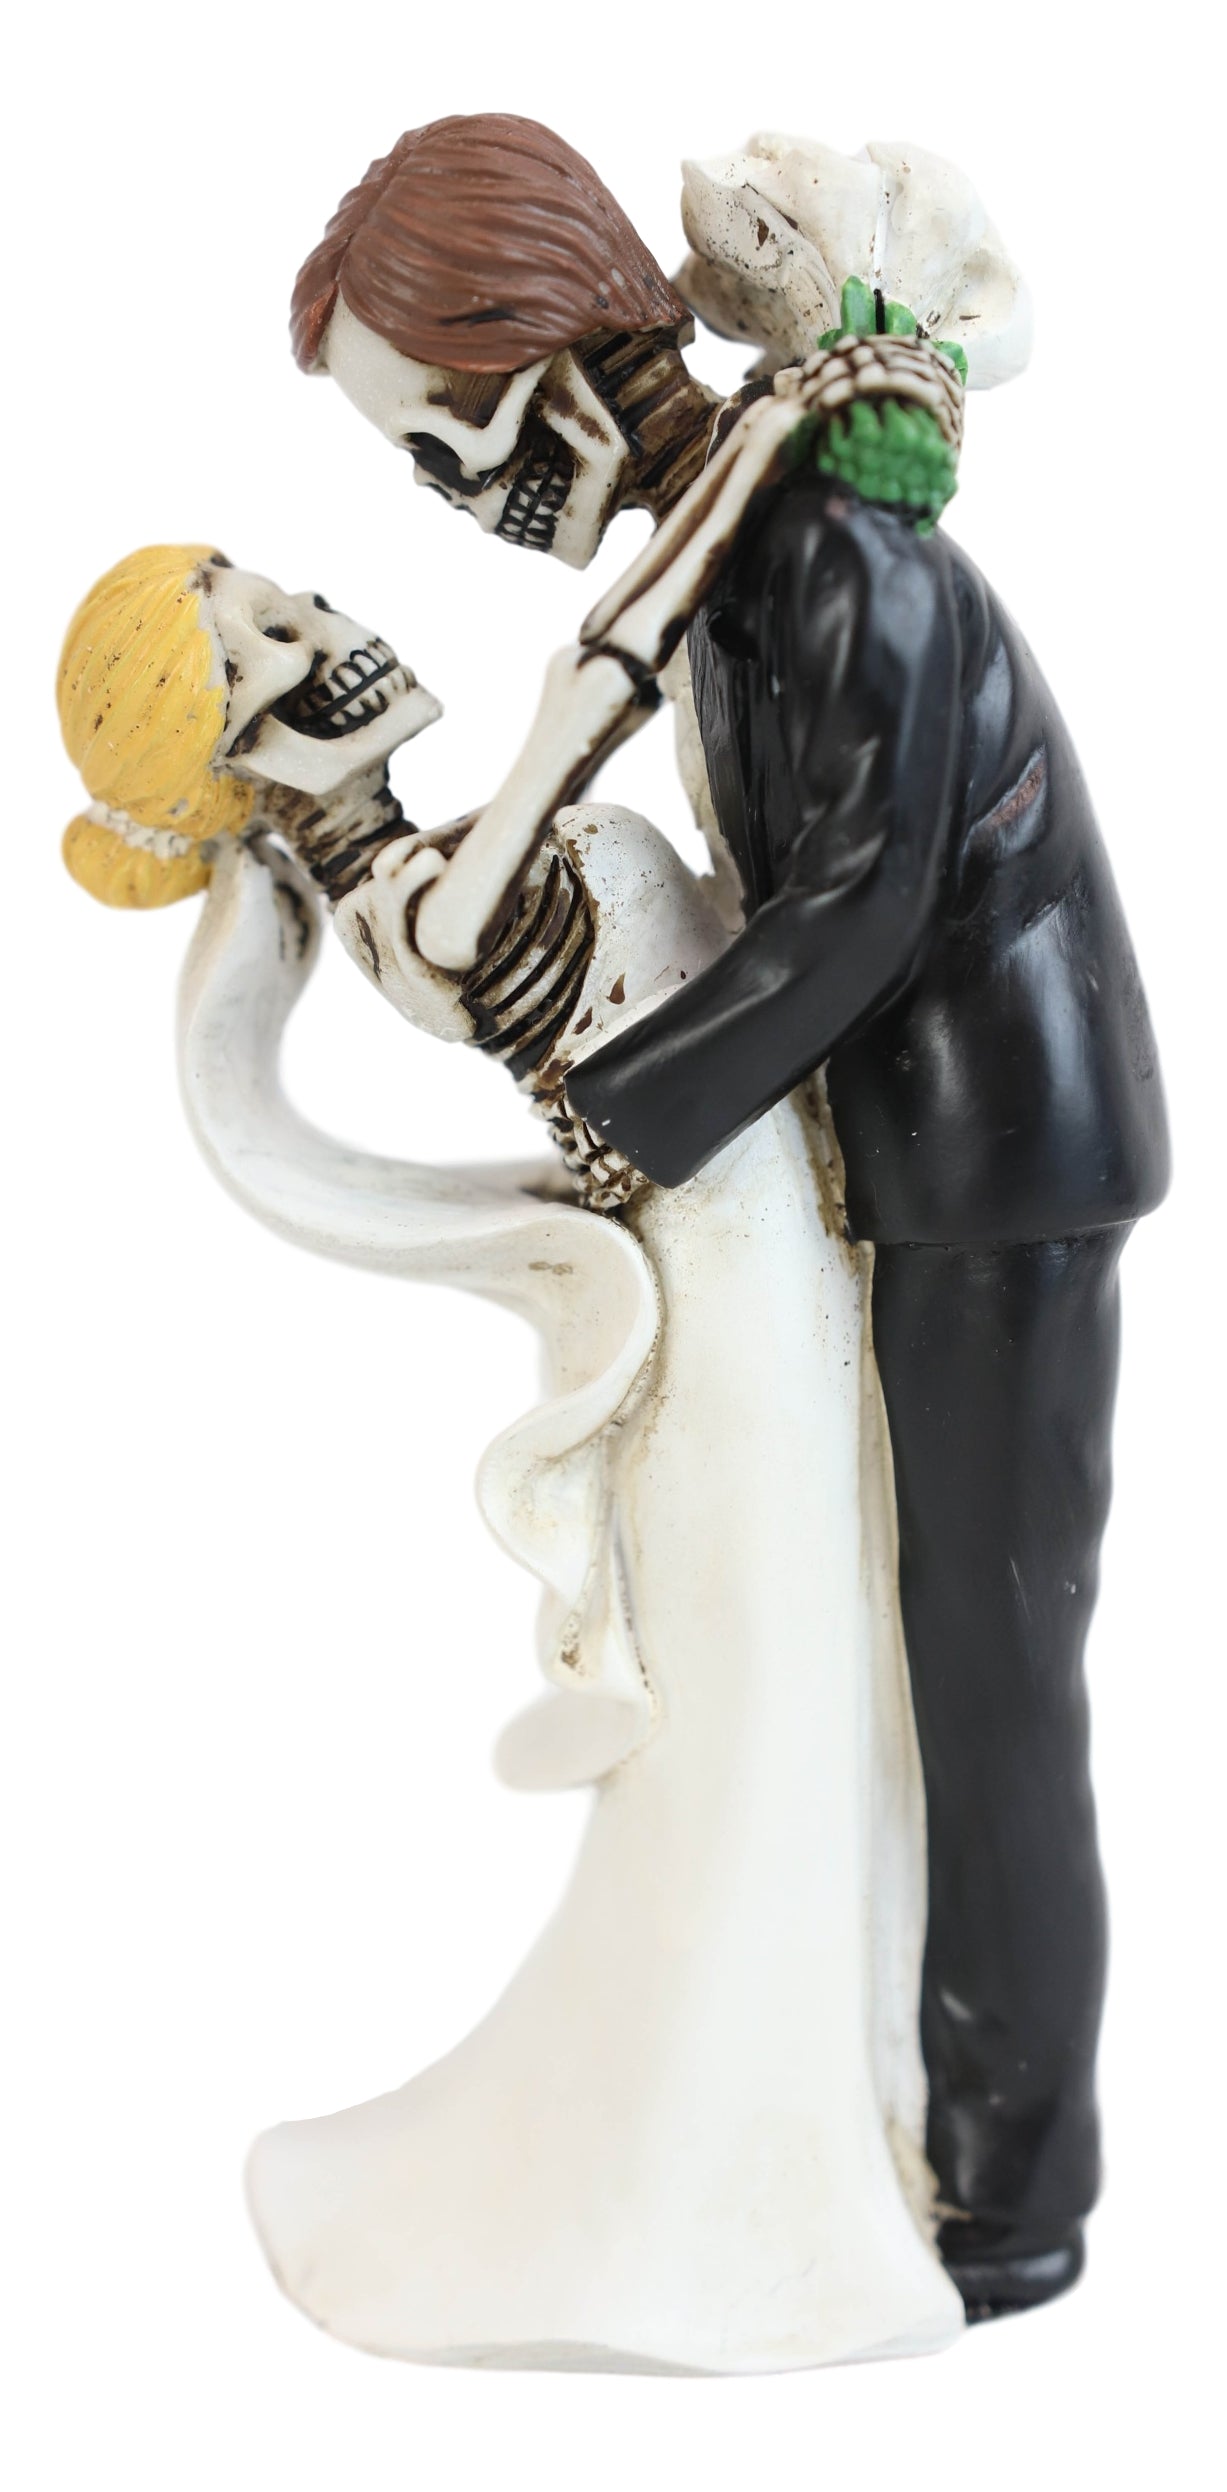 Ebros Gift Love Never Dies Day Of The Dead Wedding Dance Skeletons Groom And Bride Figurine